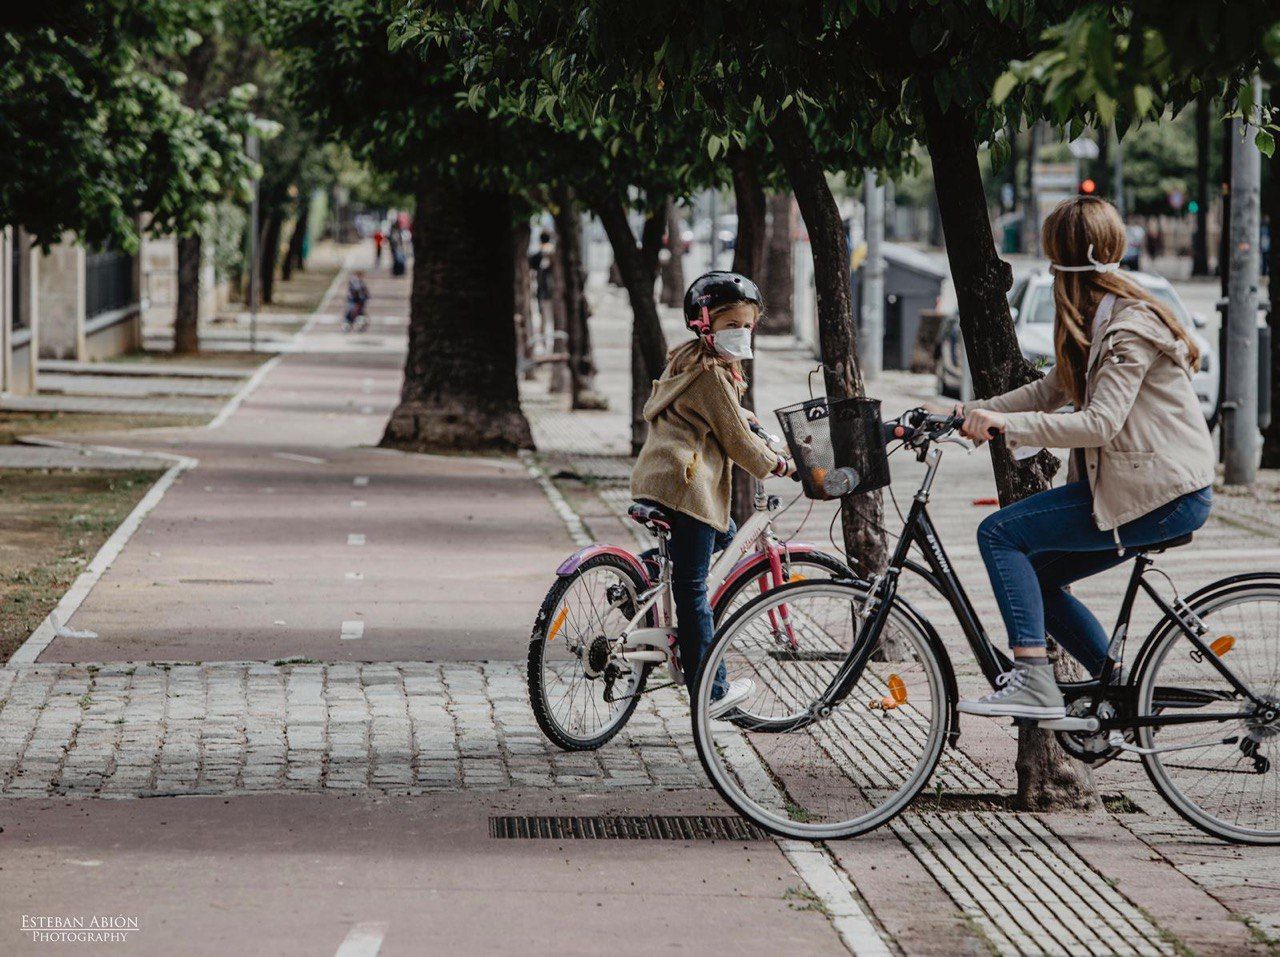 Menores, en bicicleta, paseando por la calle. FOTO: ESTEBAN PÉREZ ABIÓN